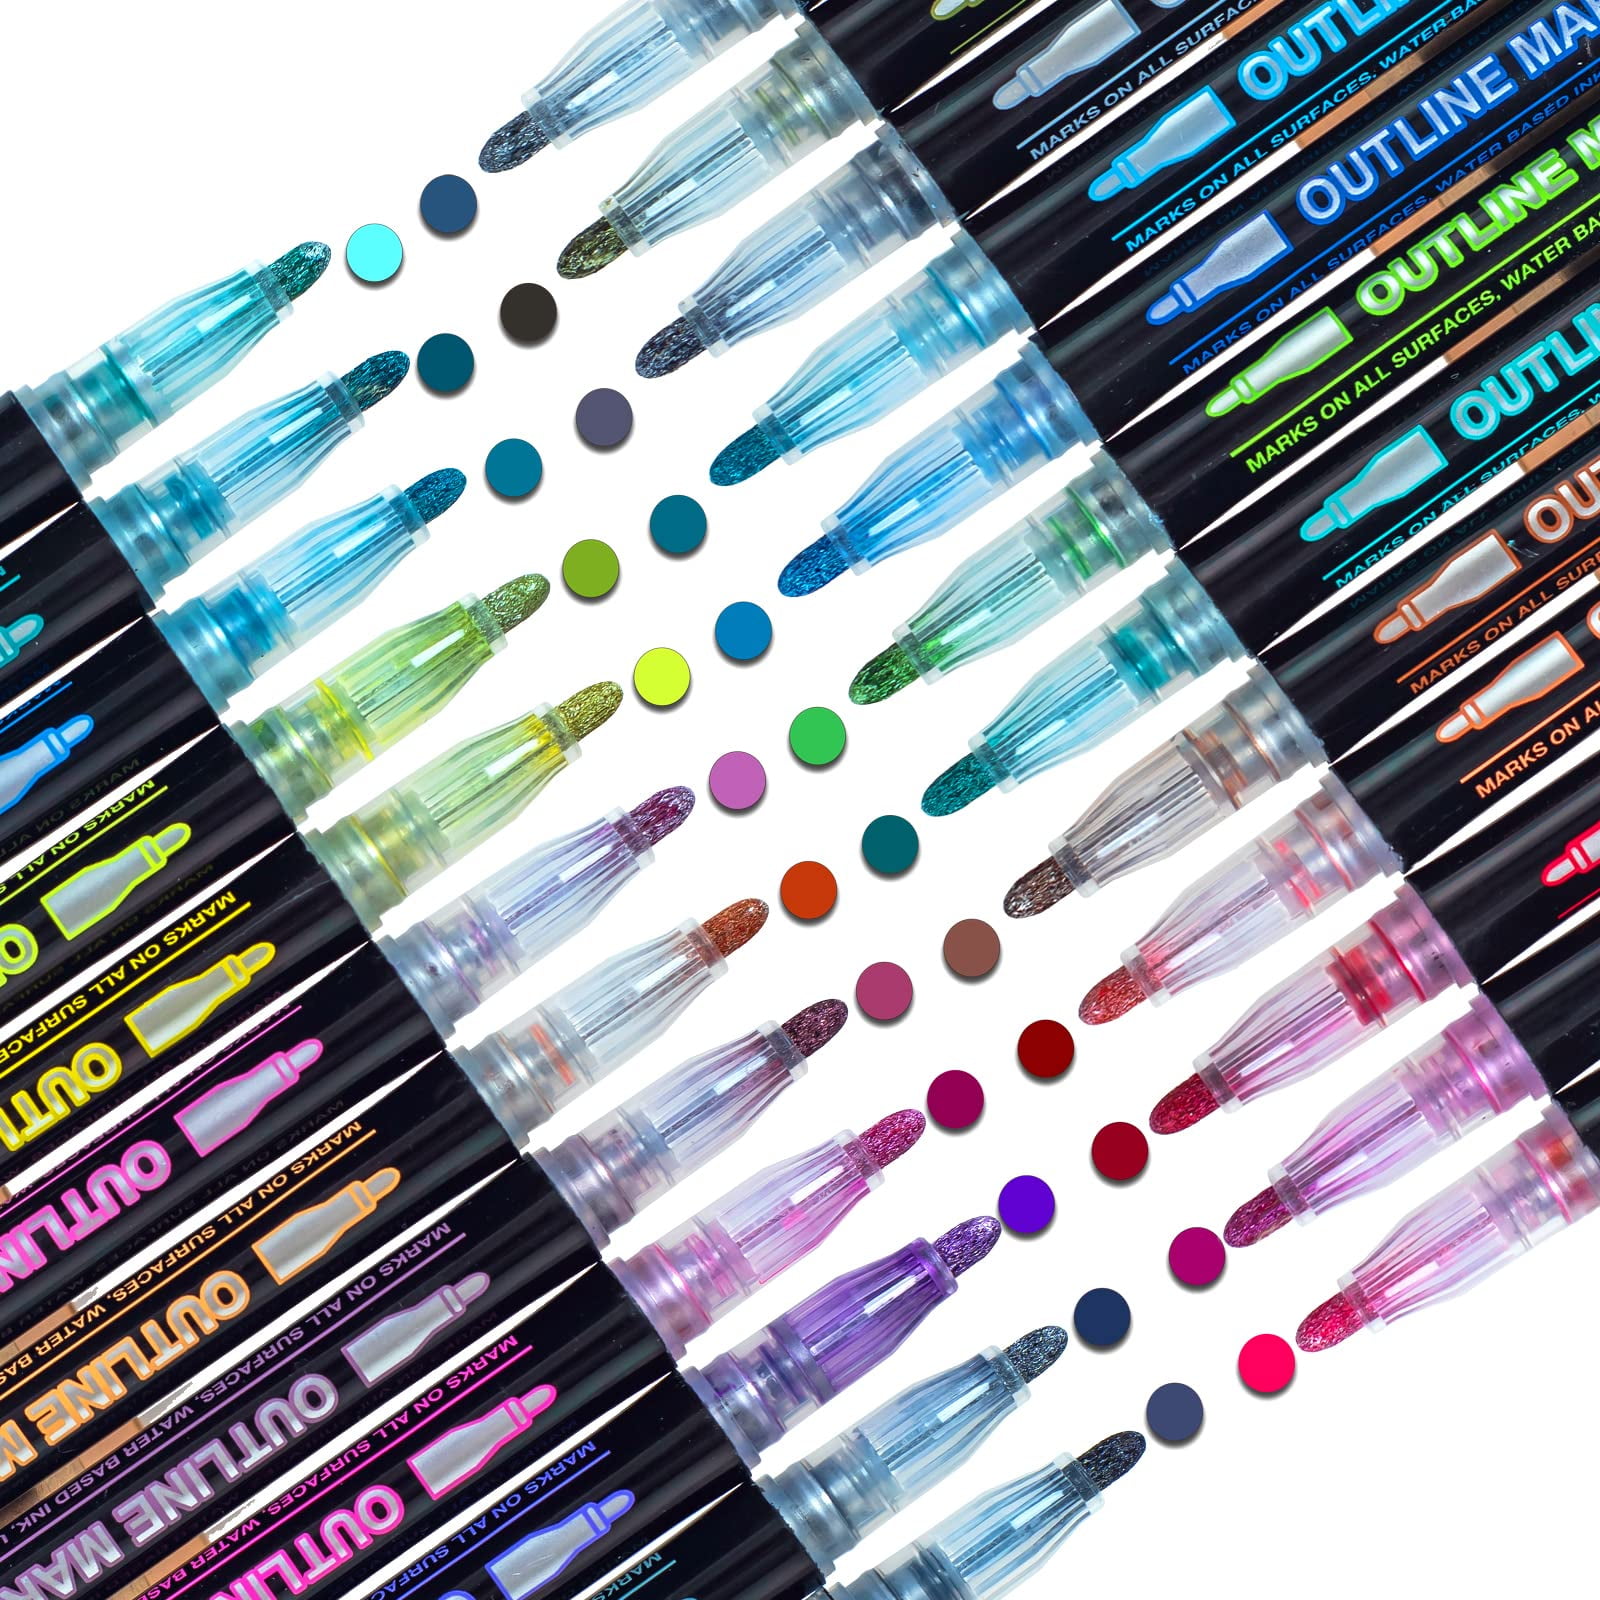 12 Colors Doodle Dazzle Markers, Outline Metallic Markers Pens